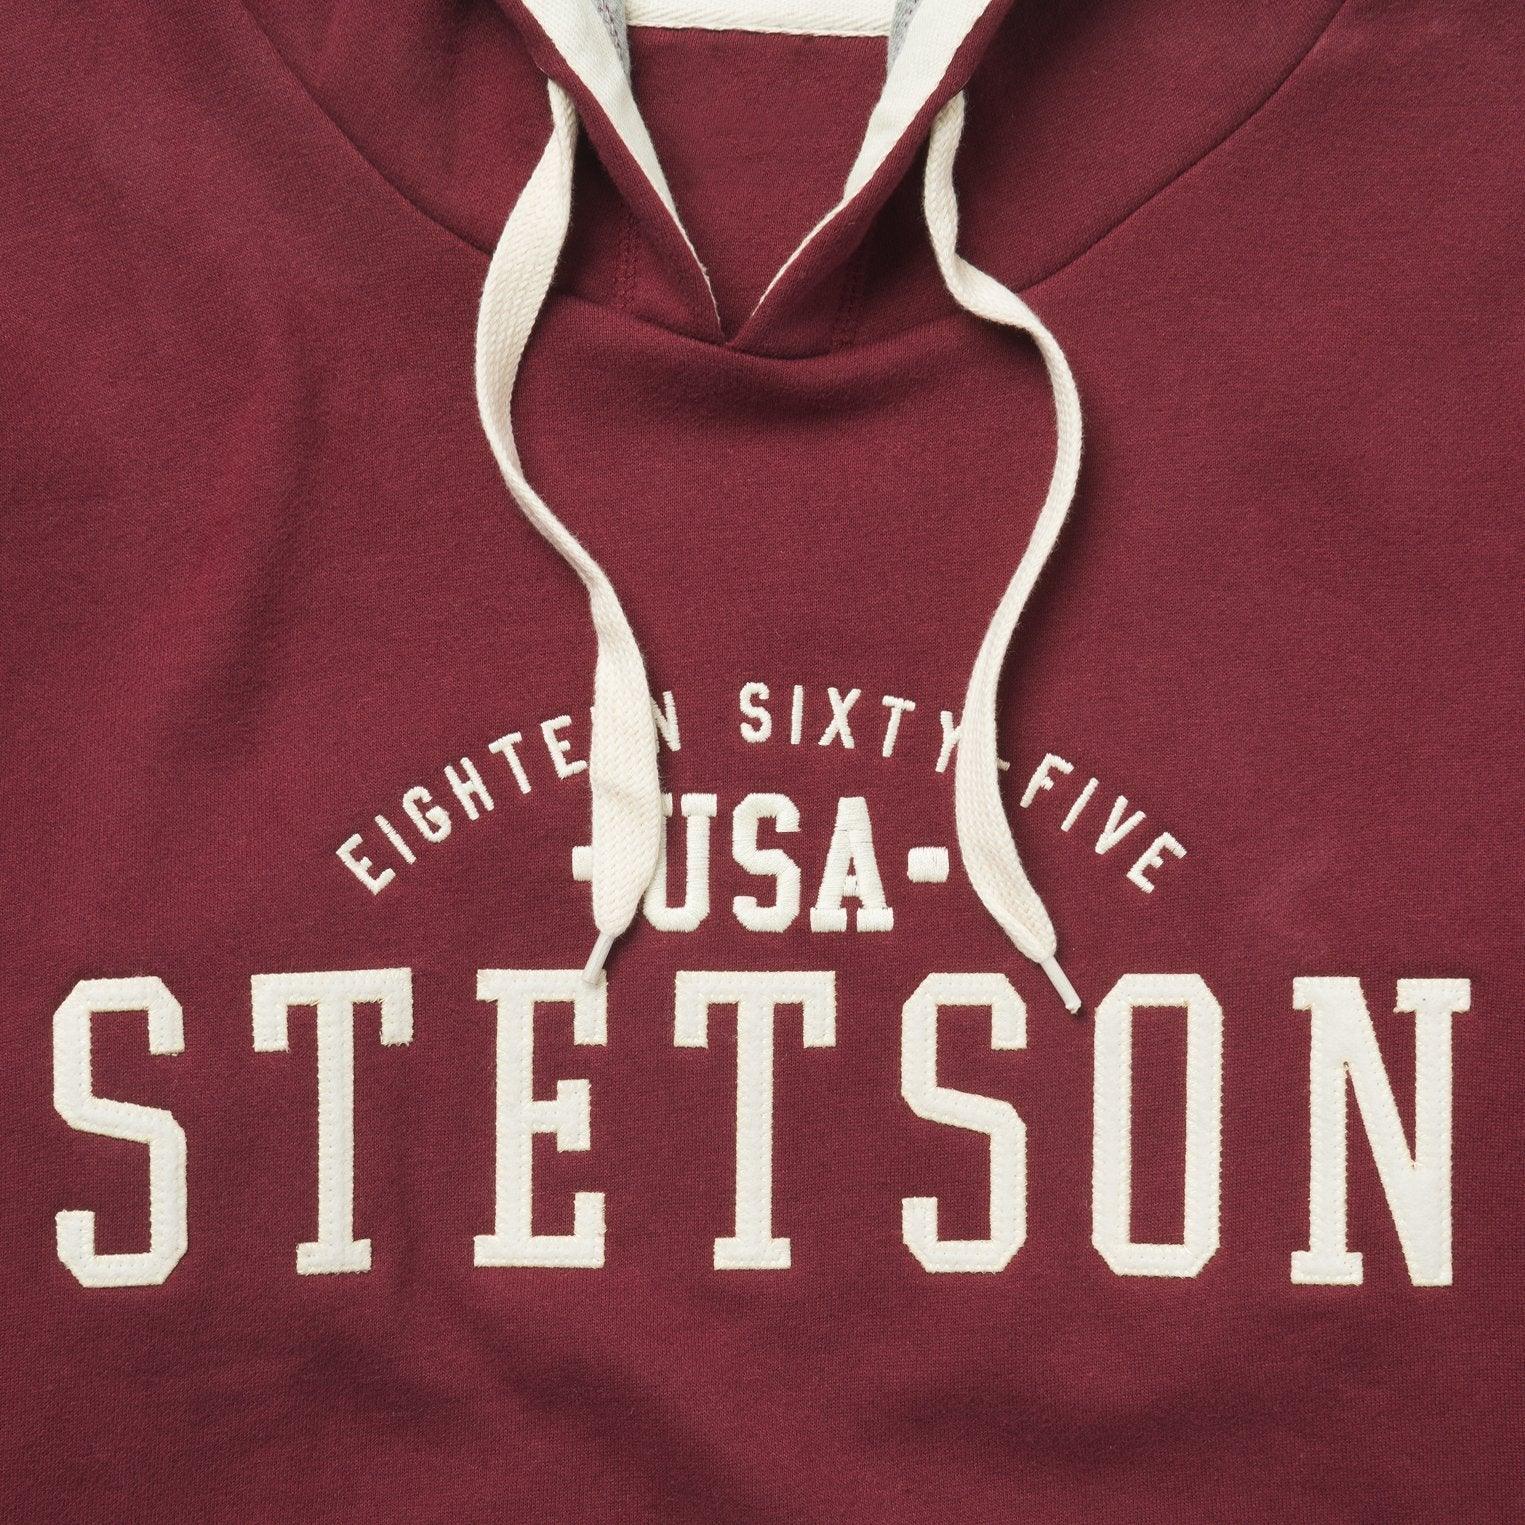 Stetson Hooded Sweatshirt - Flyclothing LLC